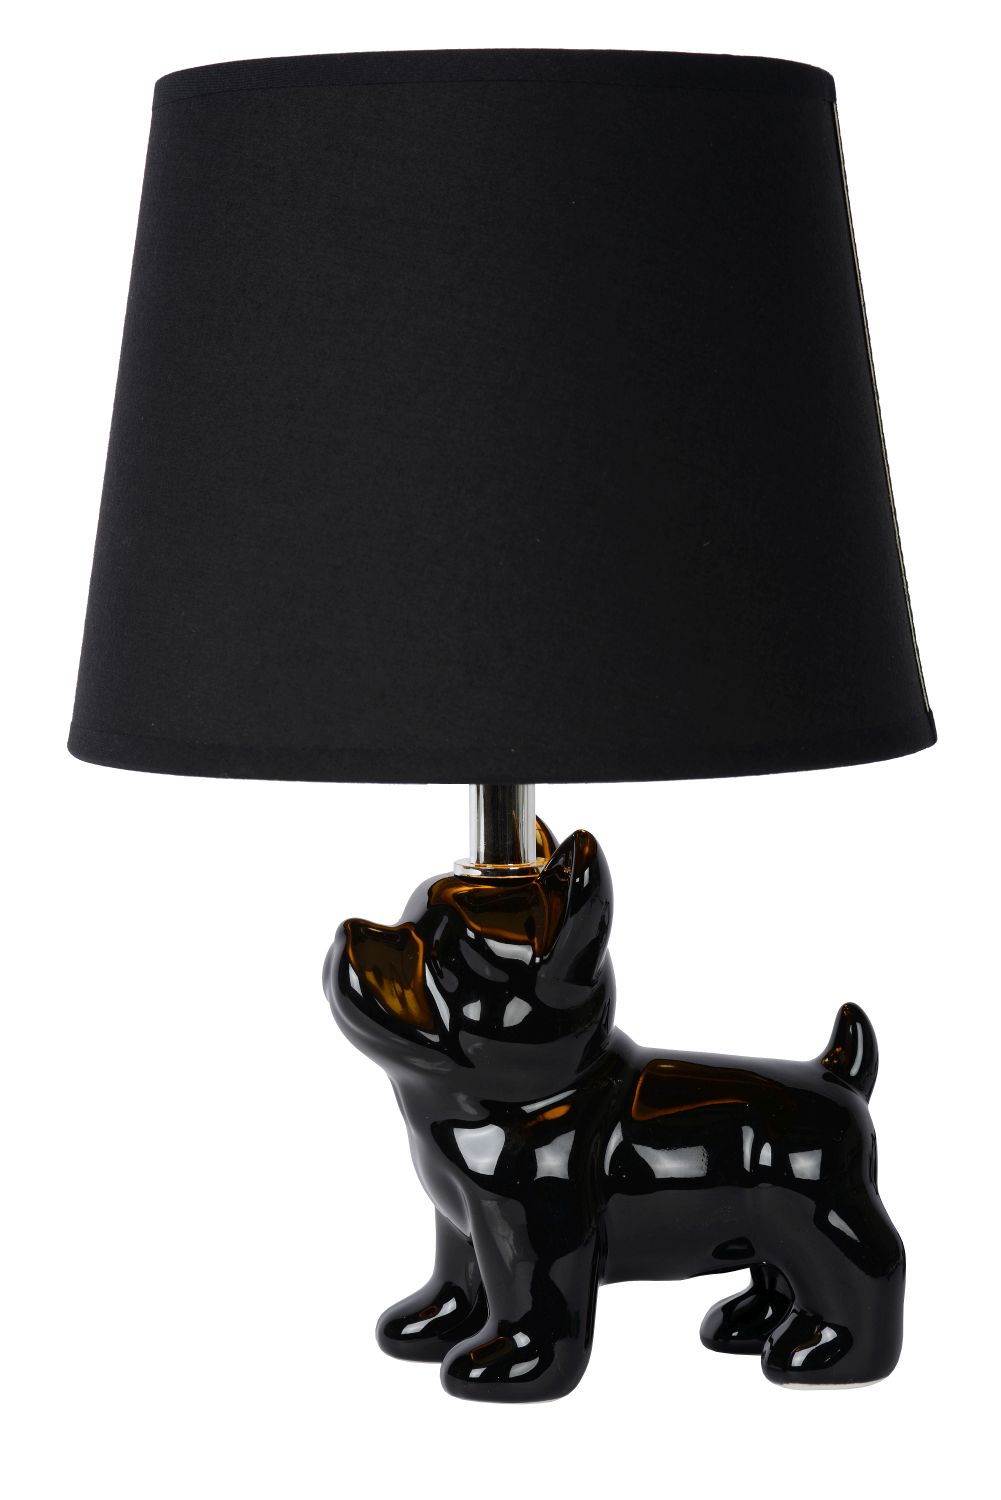 EXTRAVAGANZA SIR WINSTON Lampa stołowa z abażurem czarna 13533/81/30 Lucide